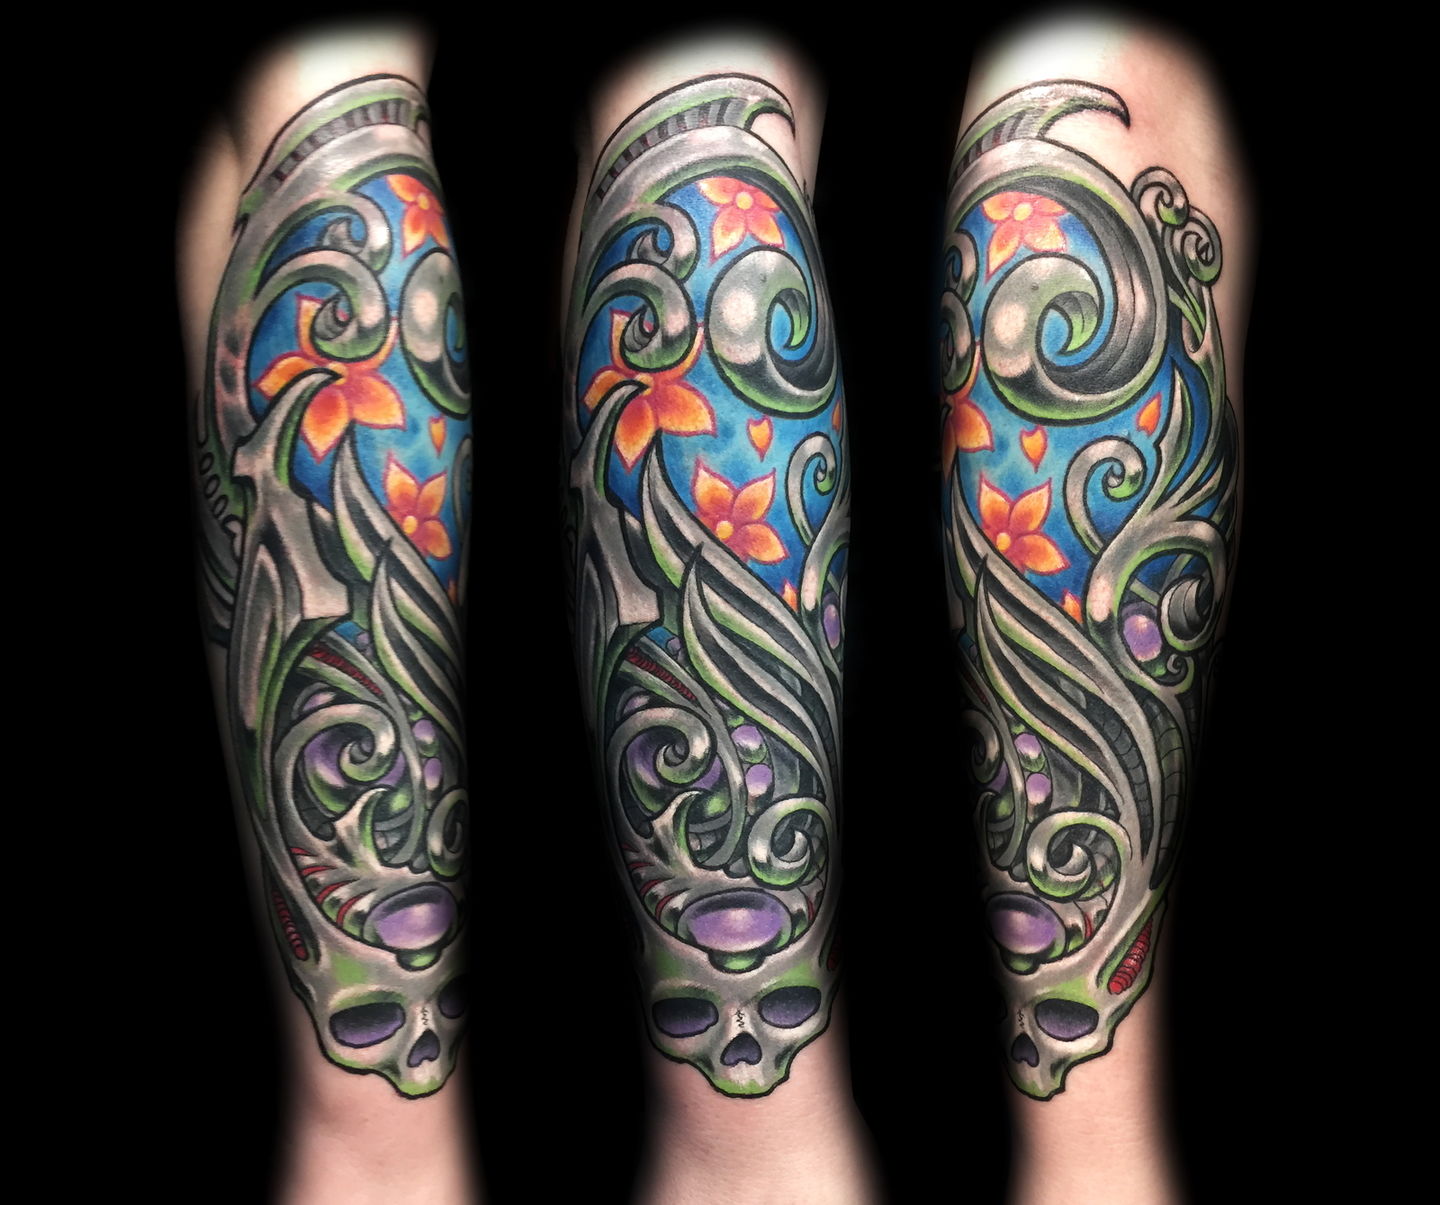 Las-vegas-tattoo-artist_joe-riley_biomech-flowers